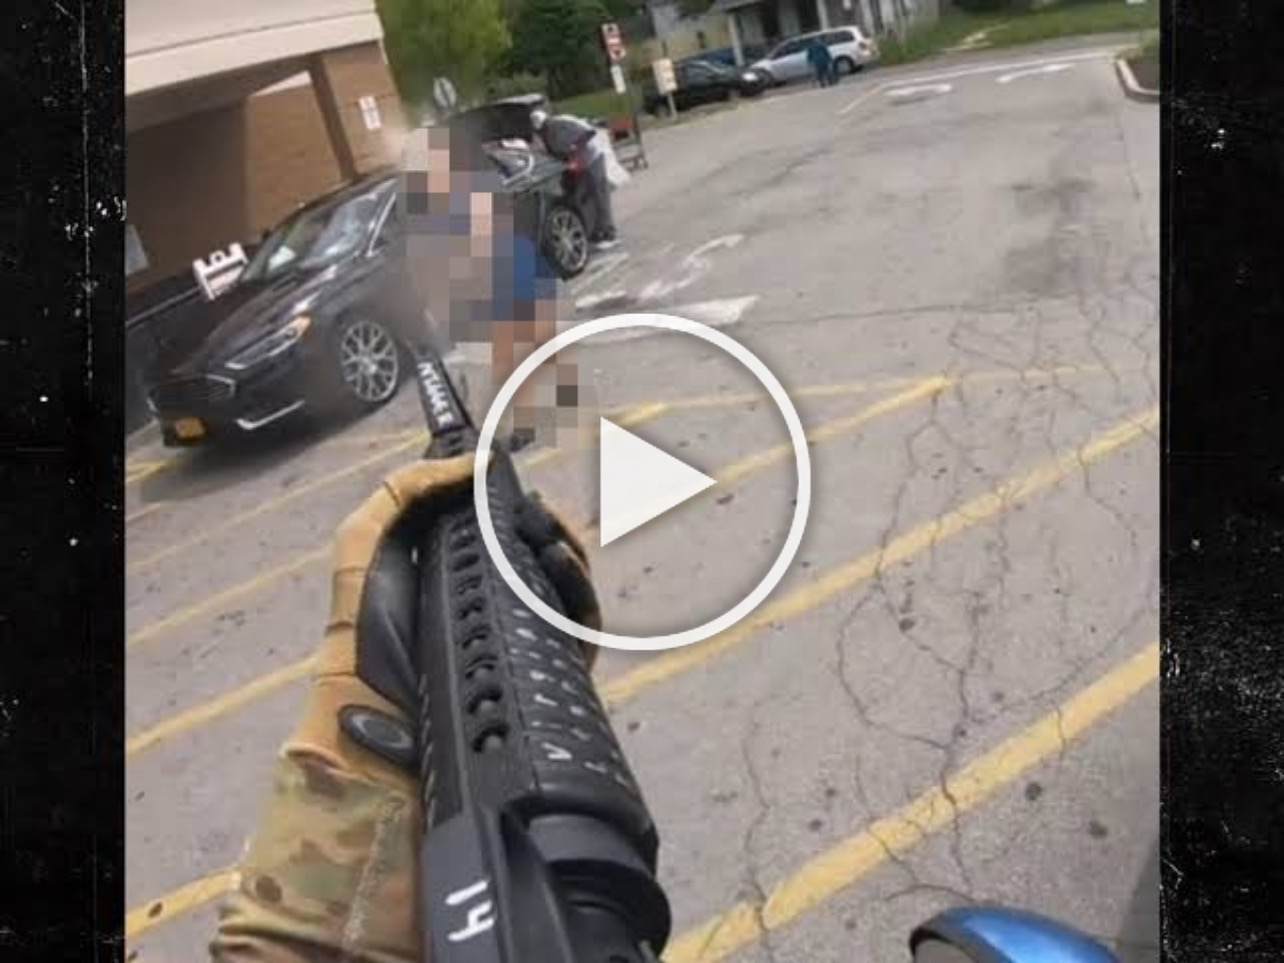 buffalo shooting video leaked – Buffalo shooting Twitch clip Viral -Buffalo shooter livestreamed the attack